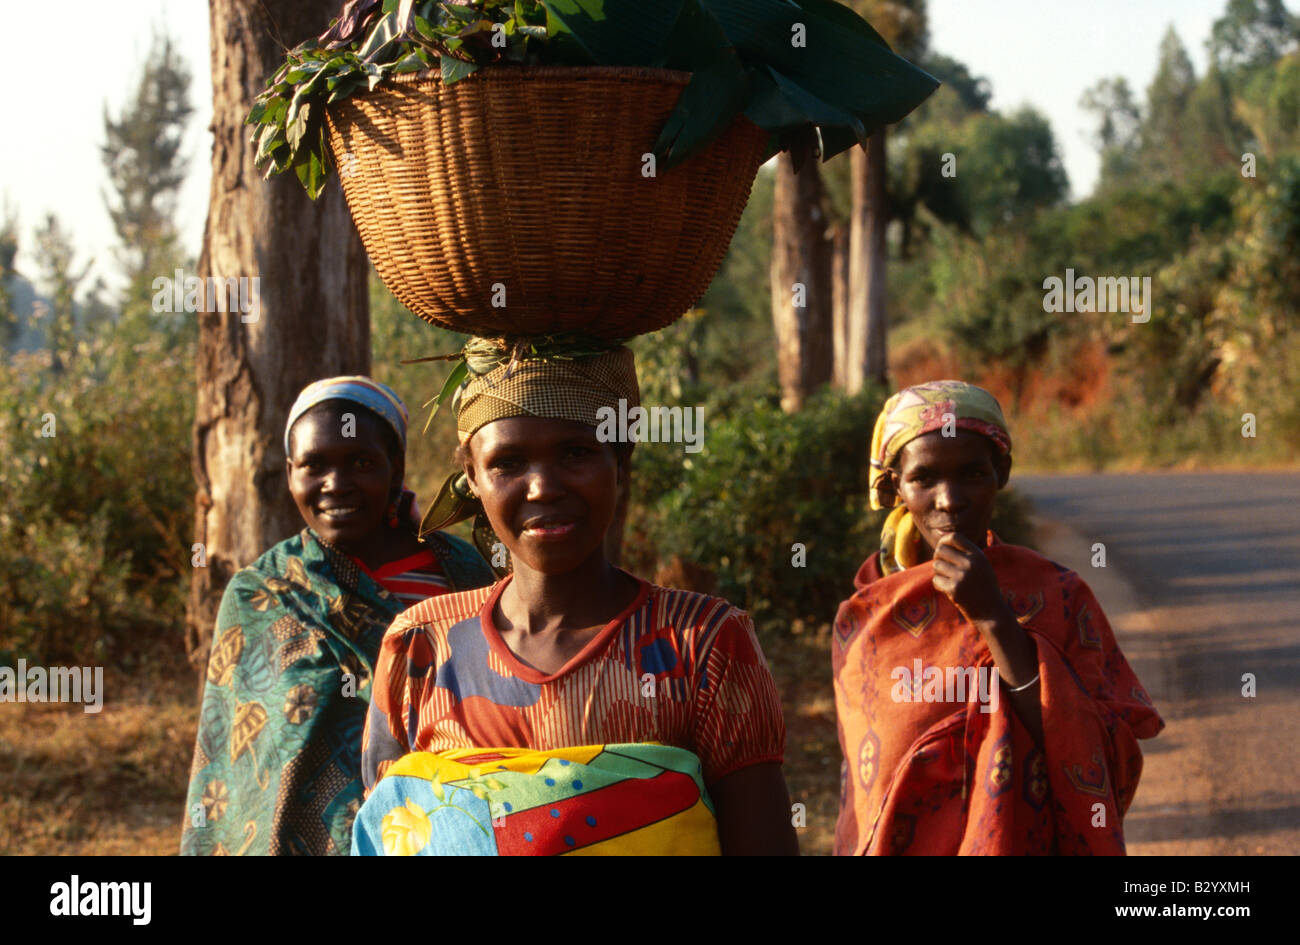 Woman carrying basket of leaves on head, Burundi Stock Photo